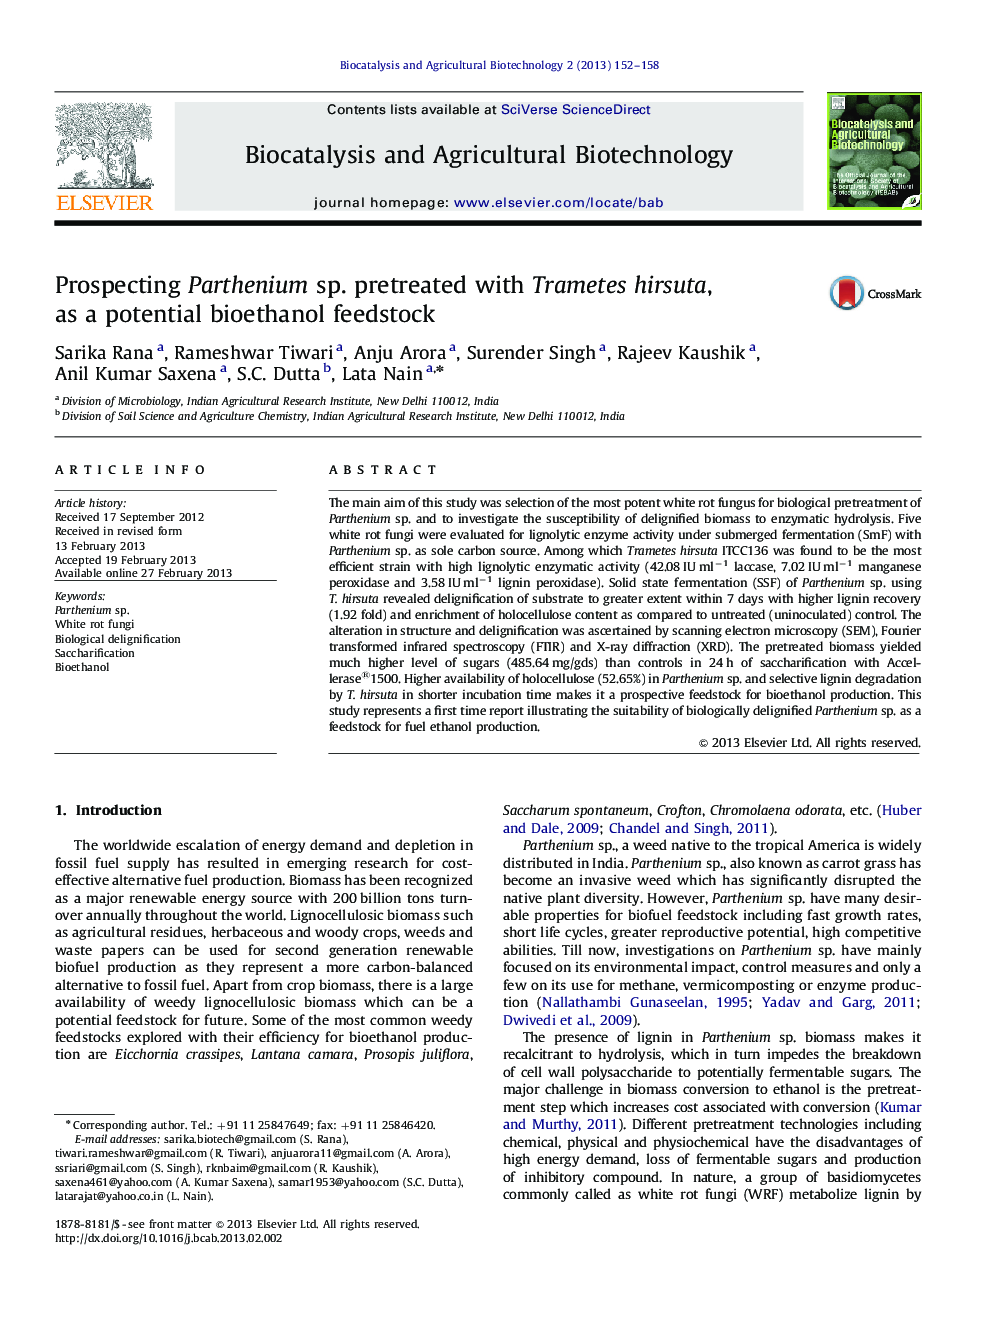 Prospecting Parthenium sp. pretreated with Trametes hirsuta, as a potential bioethanol feedstock